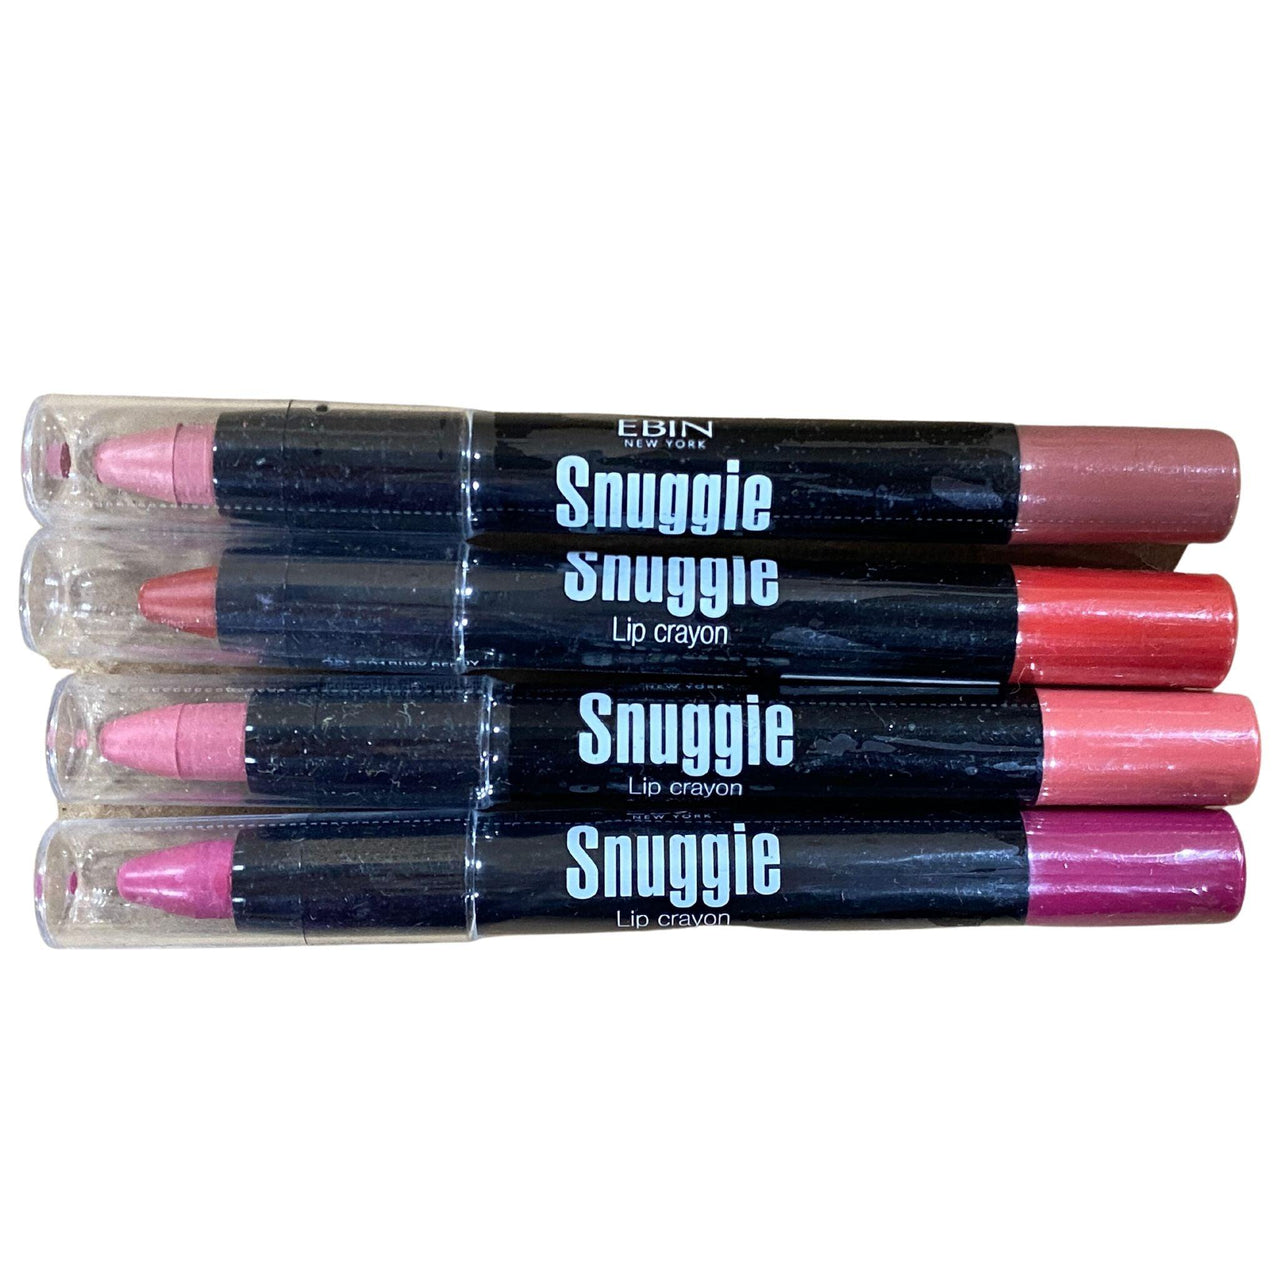 Ebin New York Snuggie Lip Crayon (50 Pcs Box) - Discount Wholesalers Inc